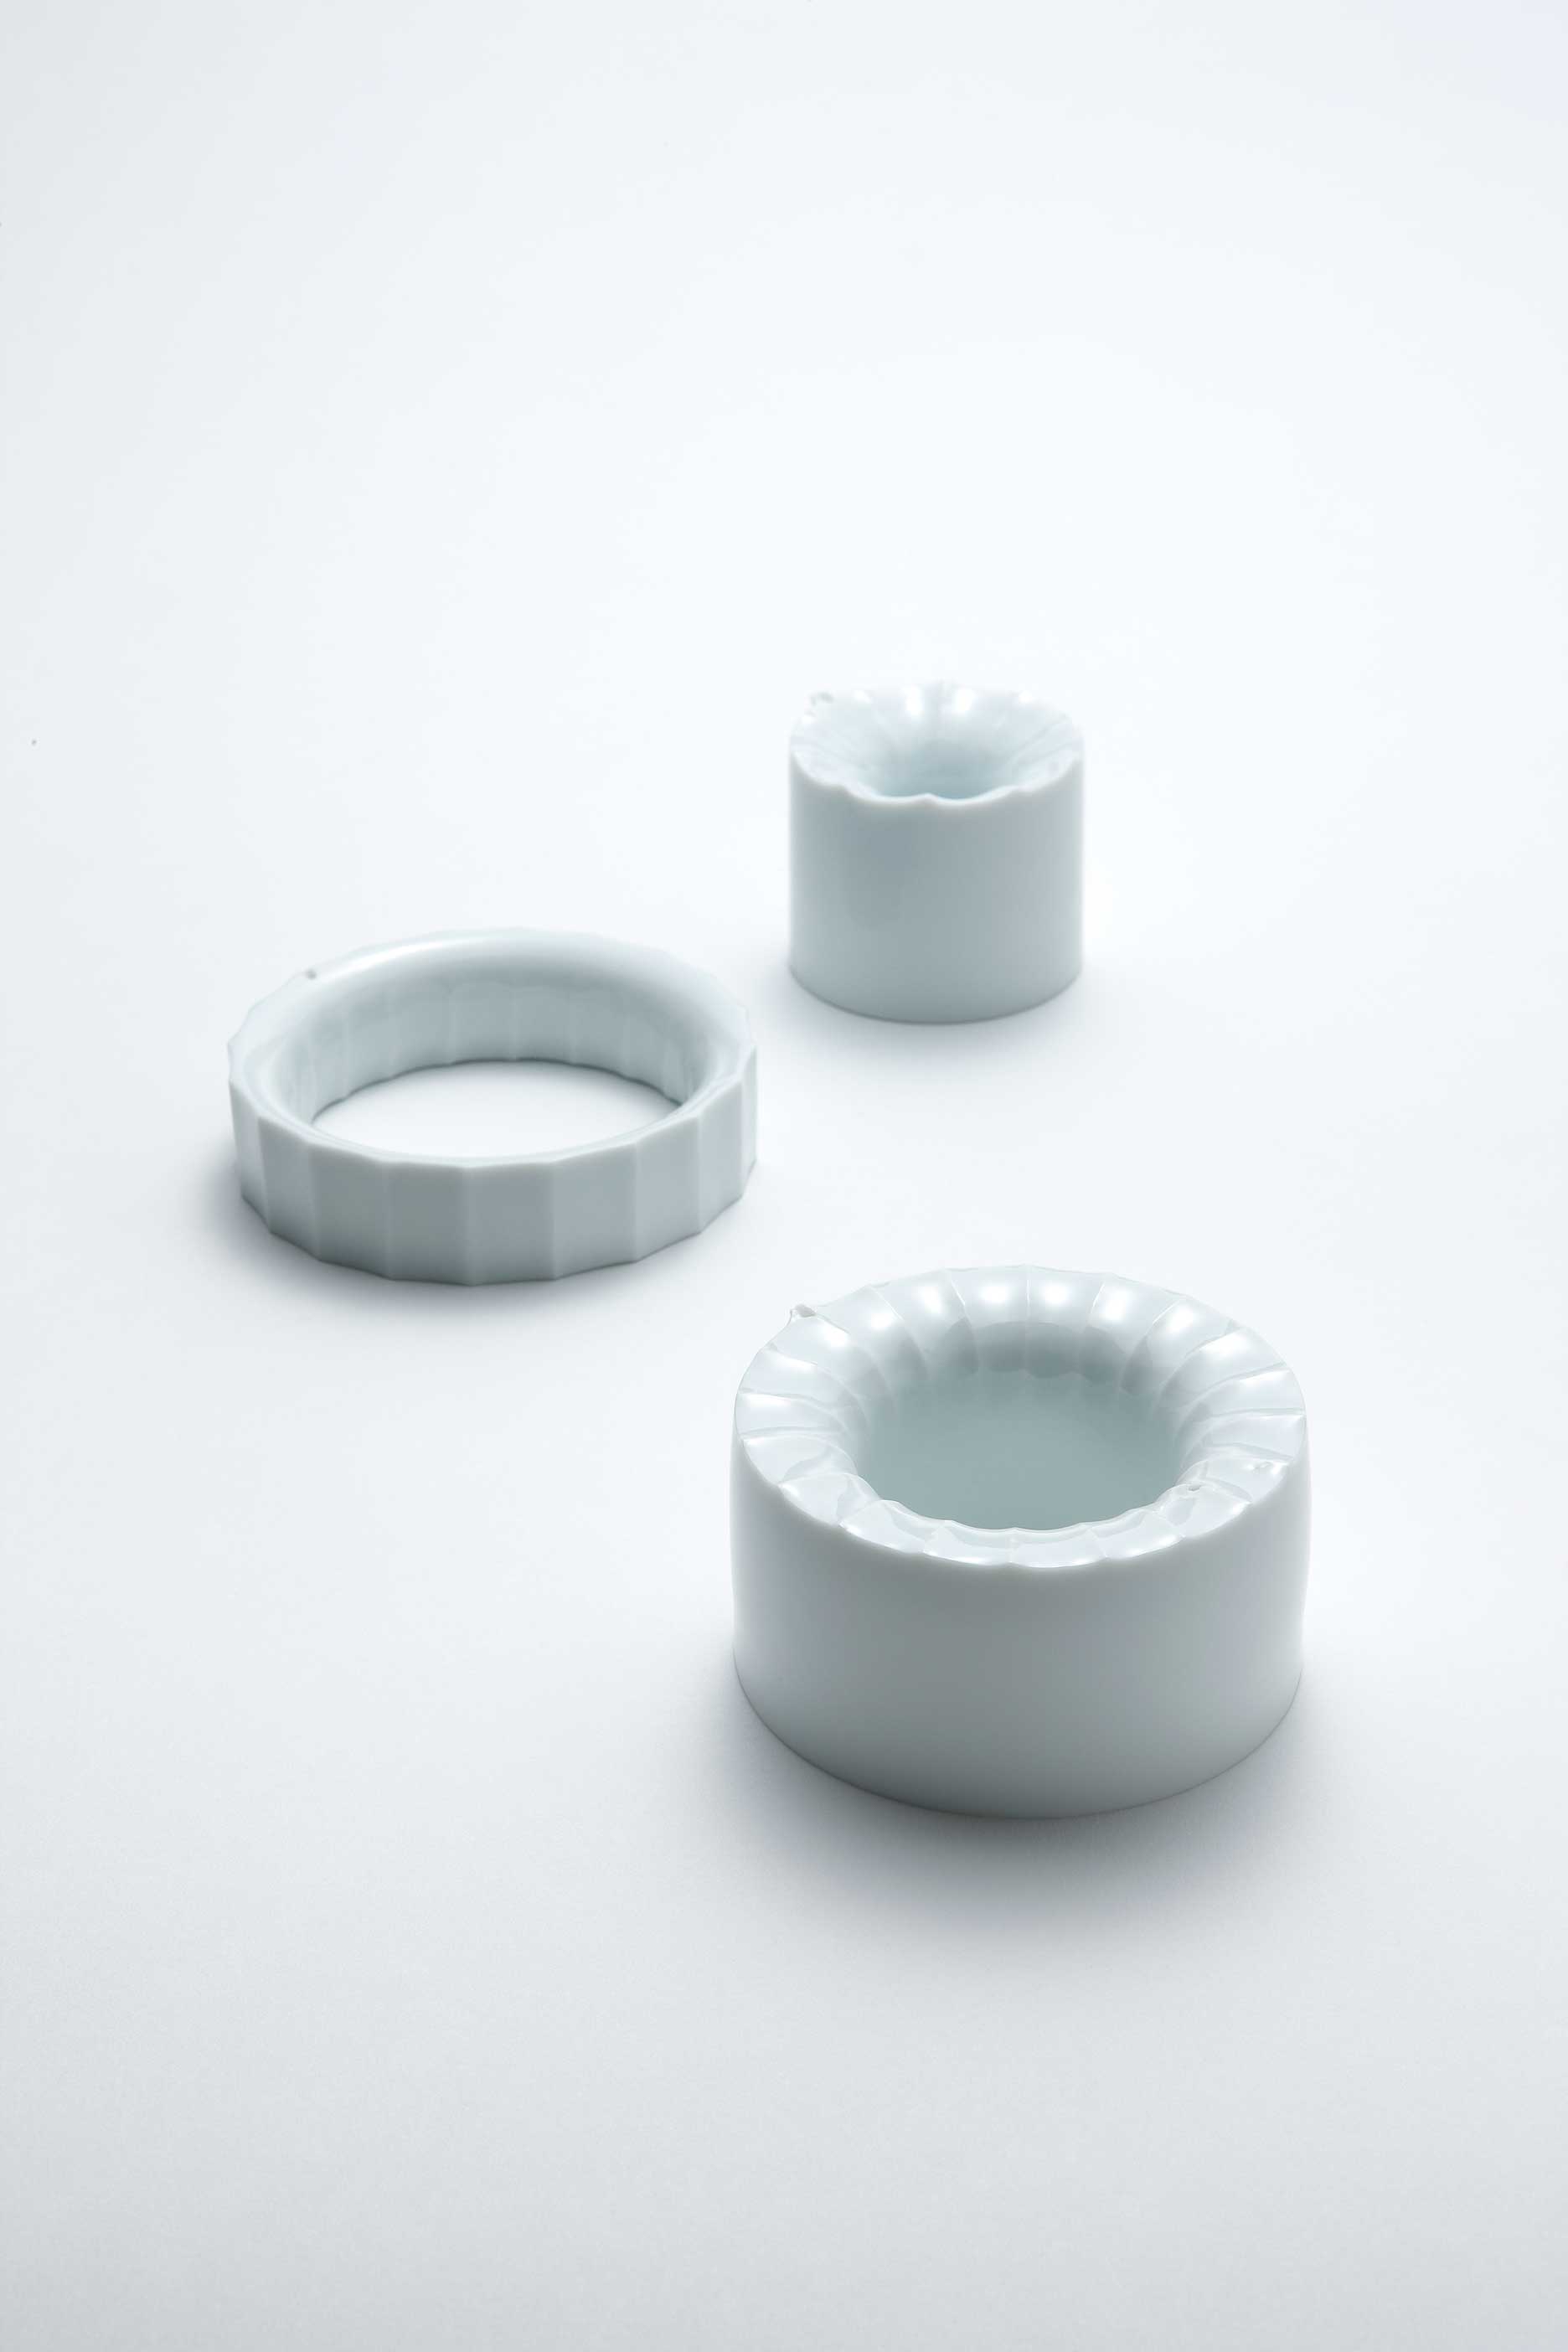 Hye Mi Lee, Water container series, porcelain, 10.2x10.2x2 cm, 7.8x7.8x7 cm, 8x8x5.5 cm, 2013